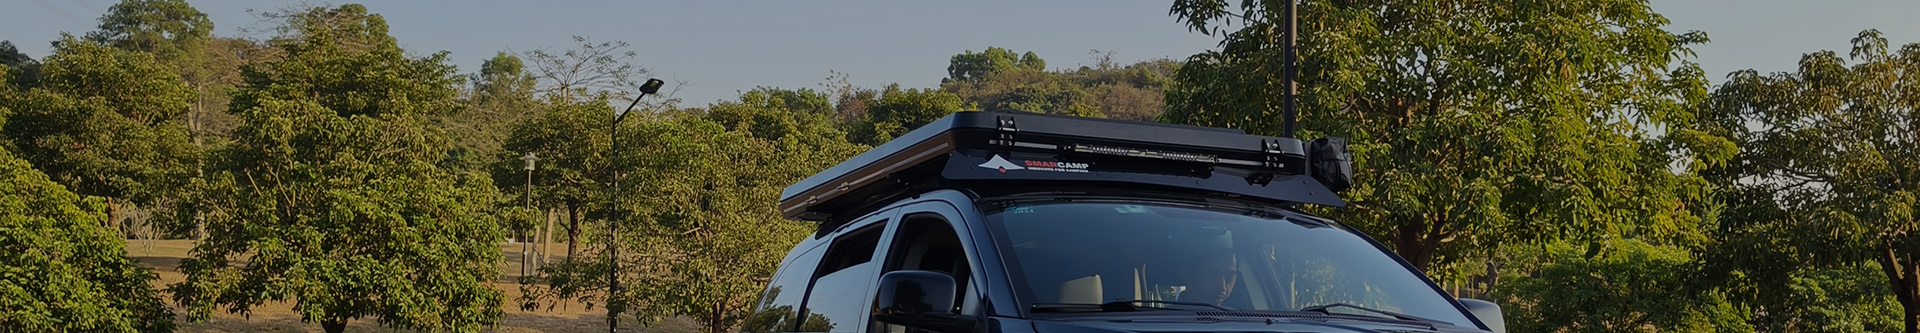 Aluminum Roof Rack Platform for All Vehicle